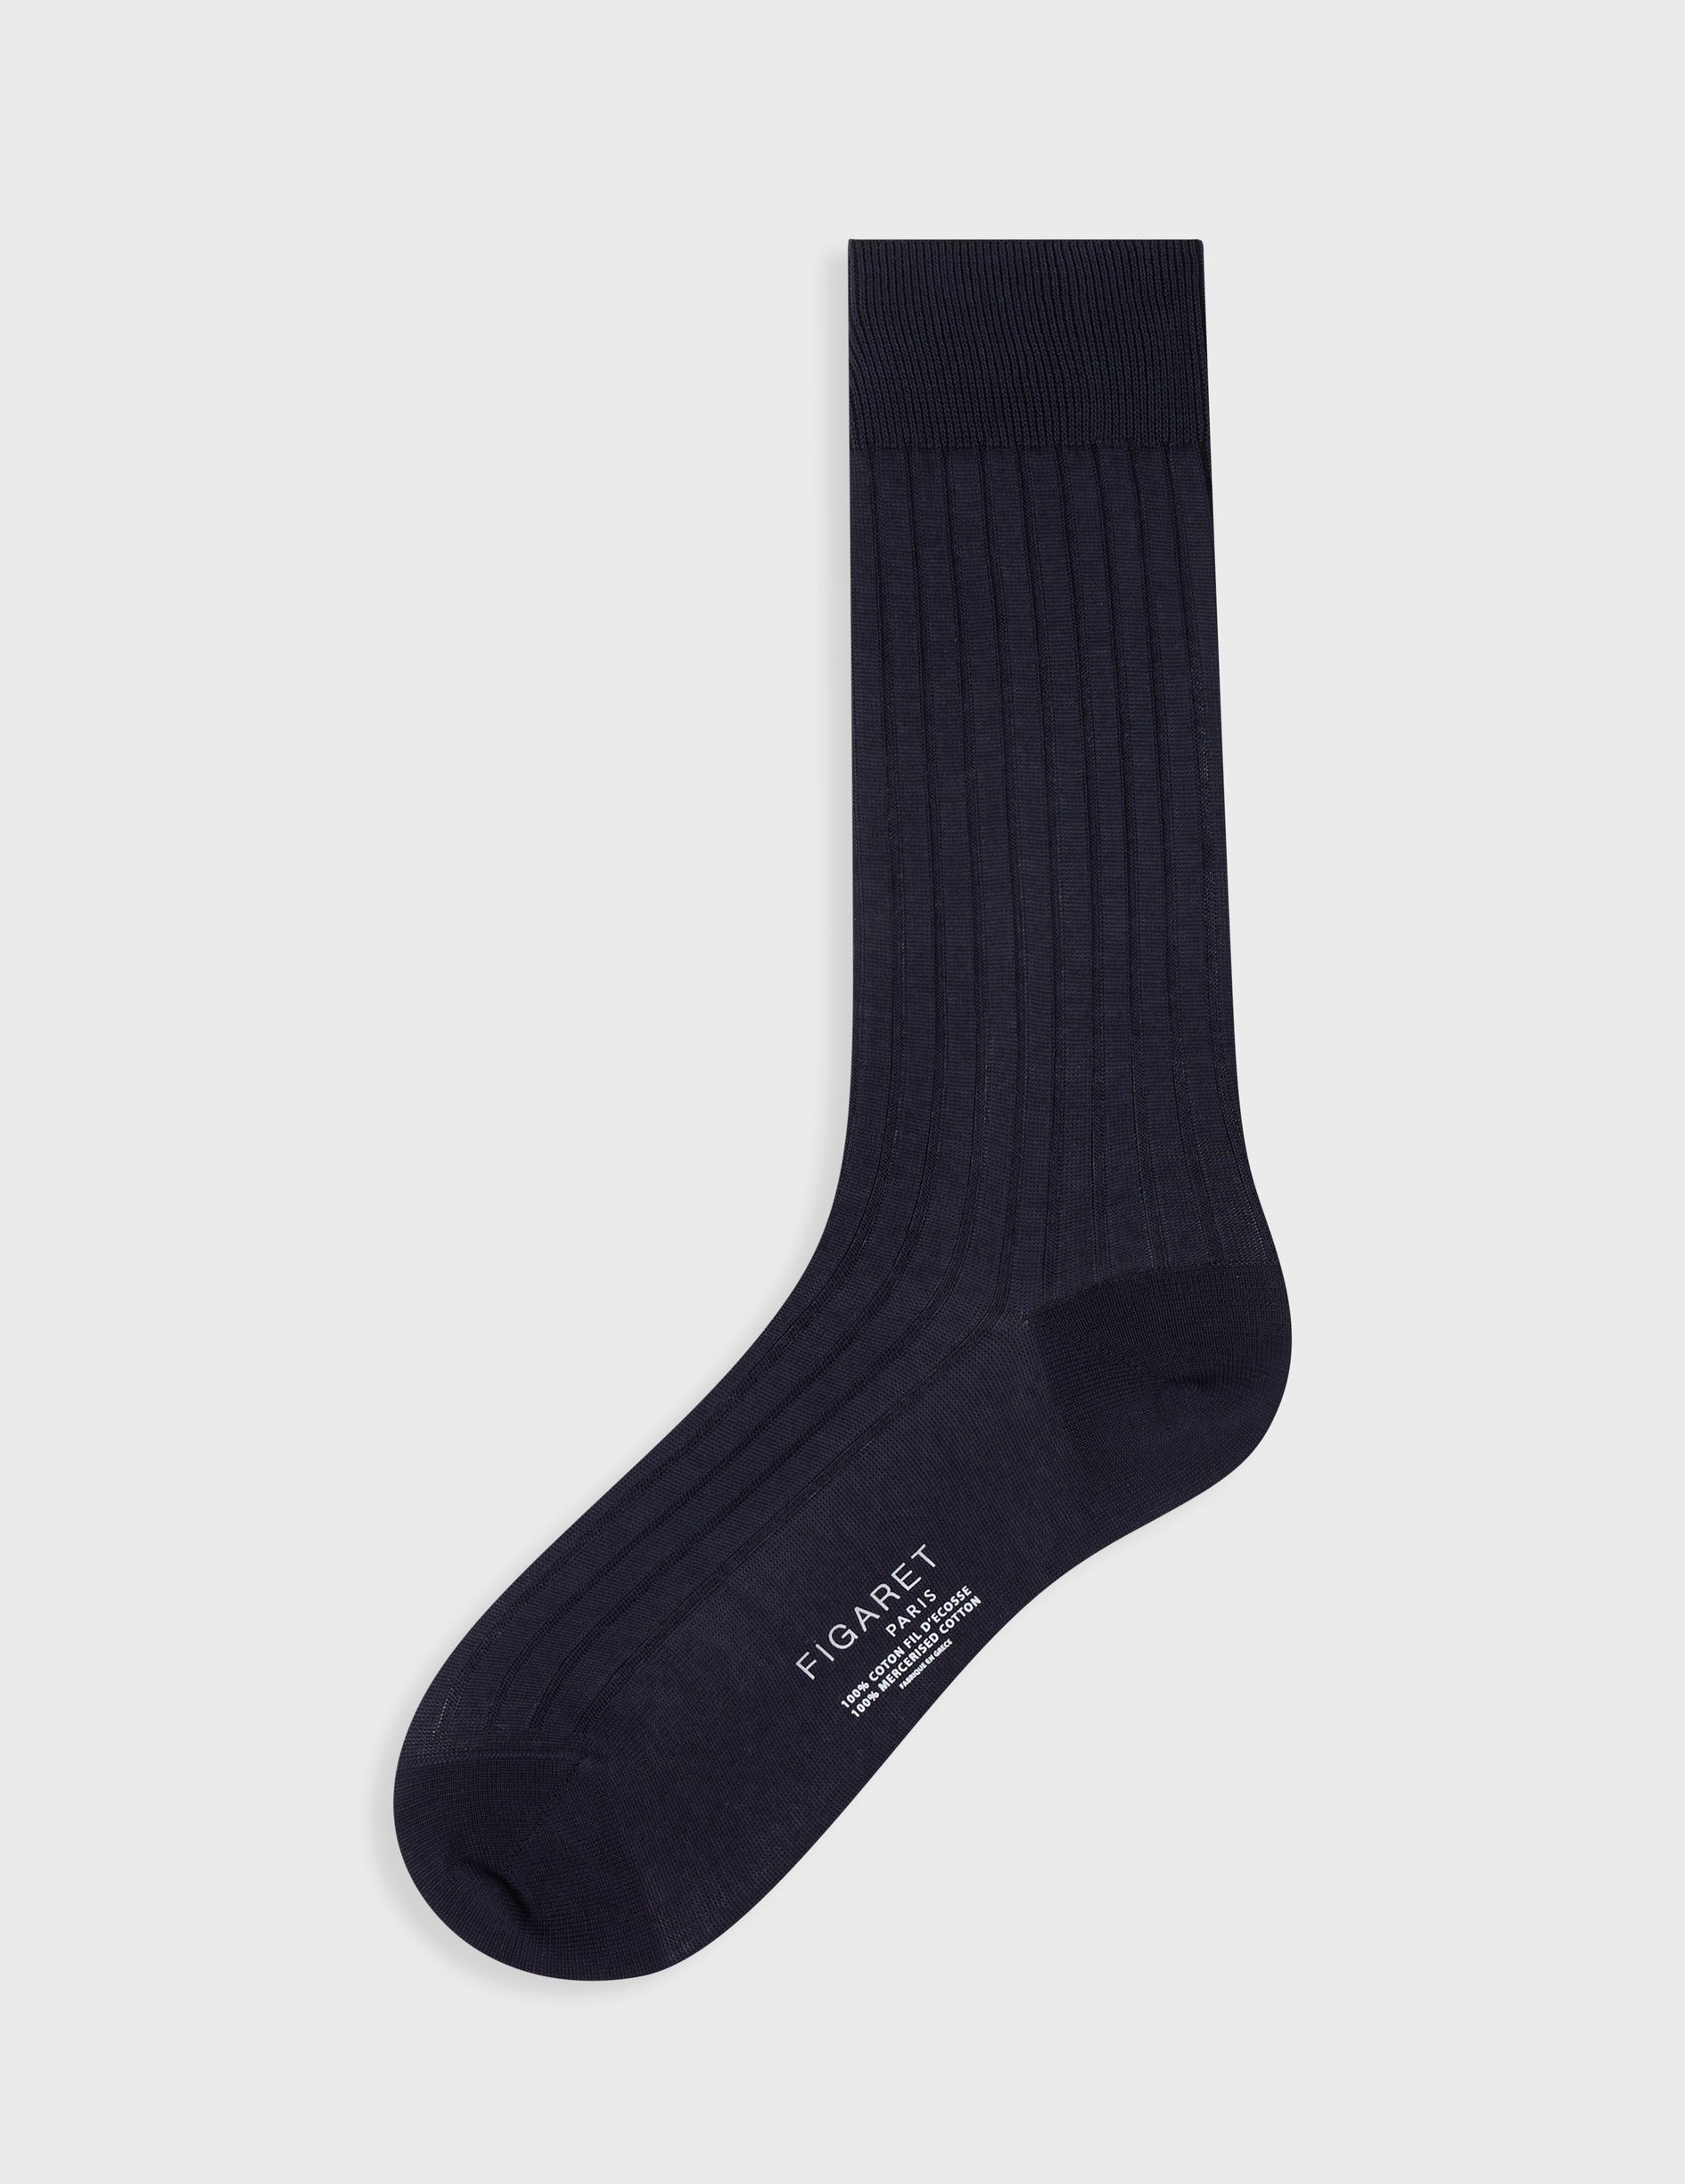 Navy double lisle thread socks